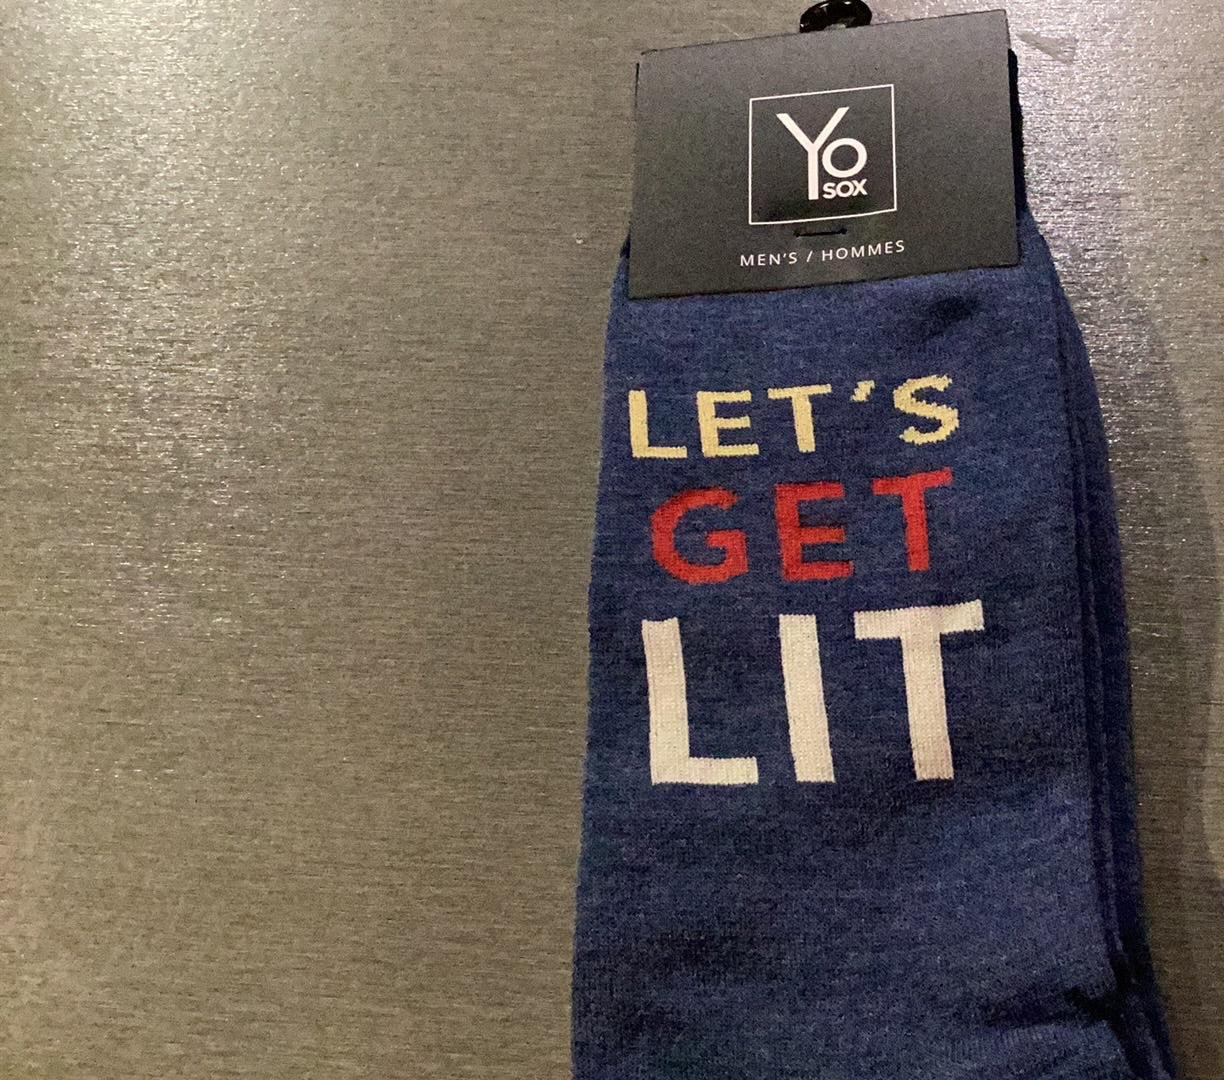 'Yo Sox Lets Get Lit Crew Socks' in 'Blue' colour